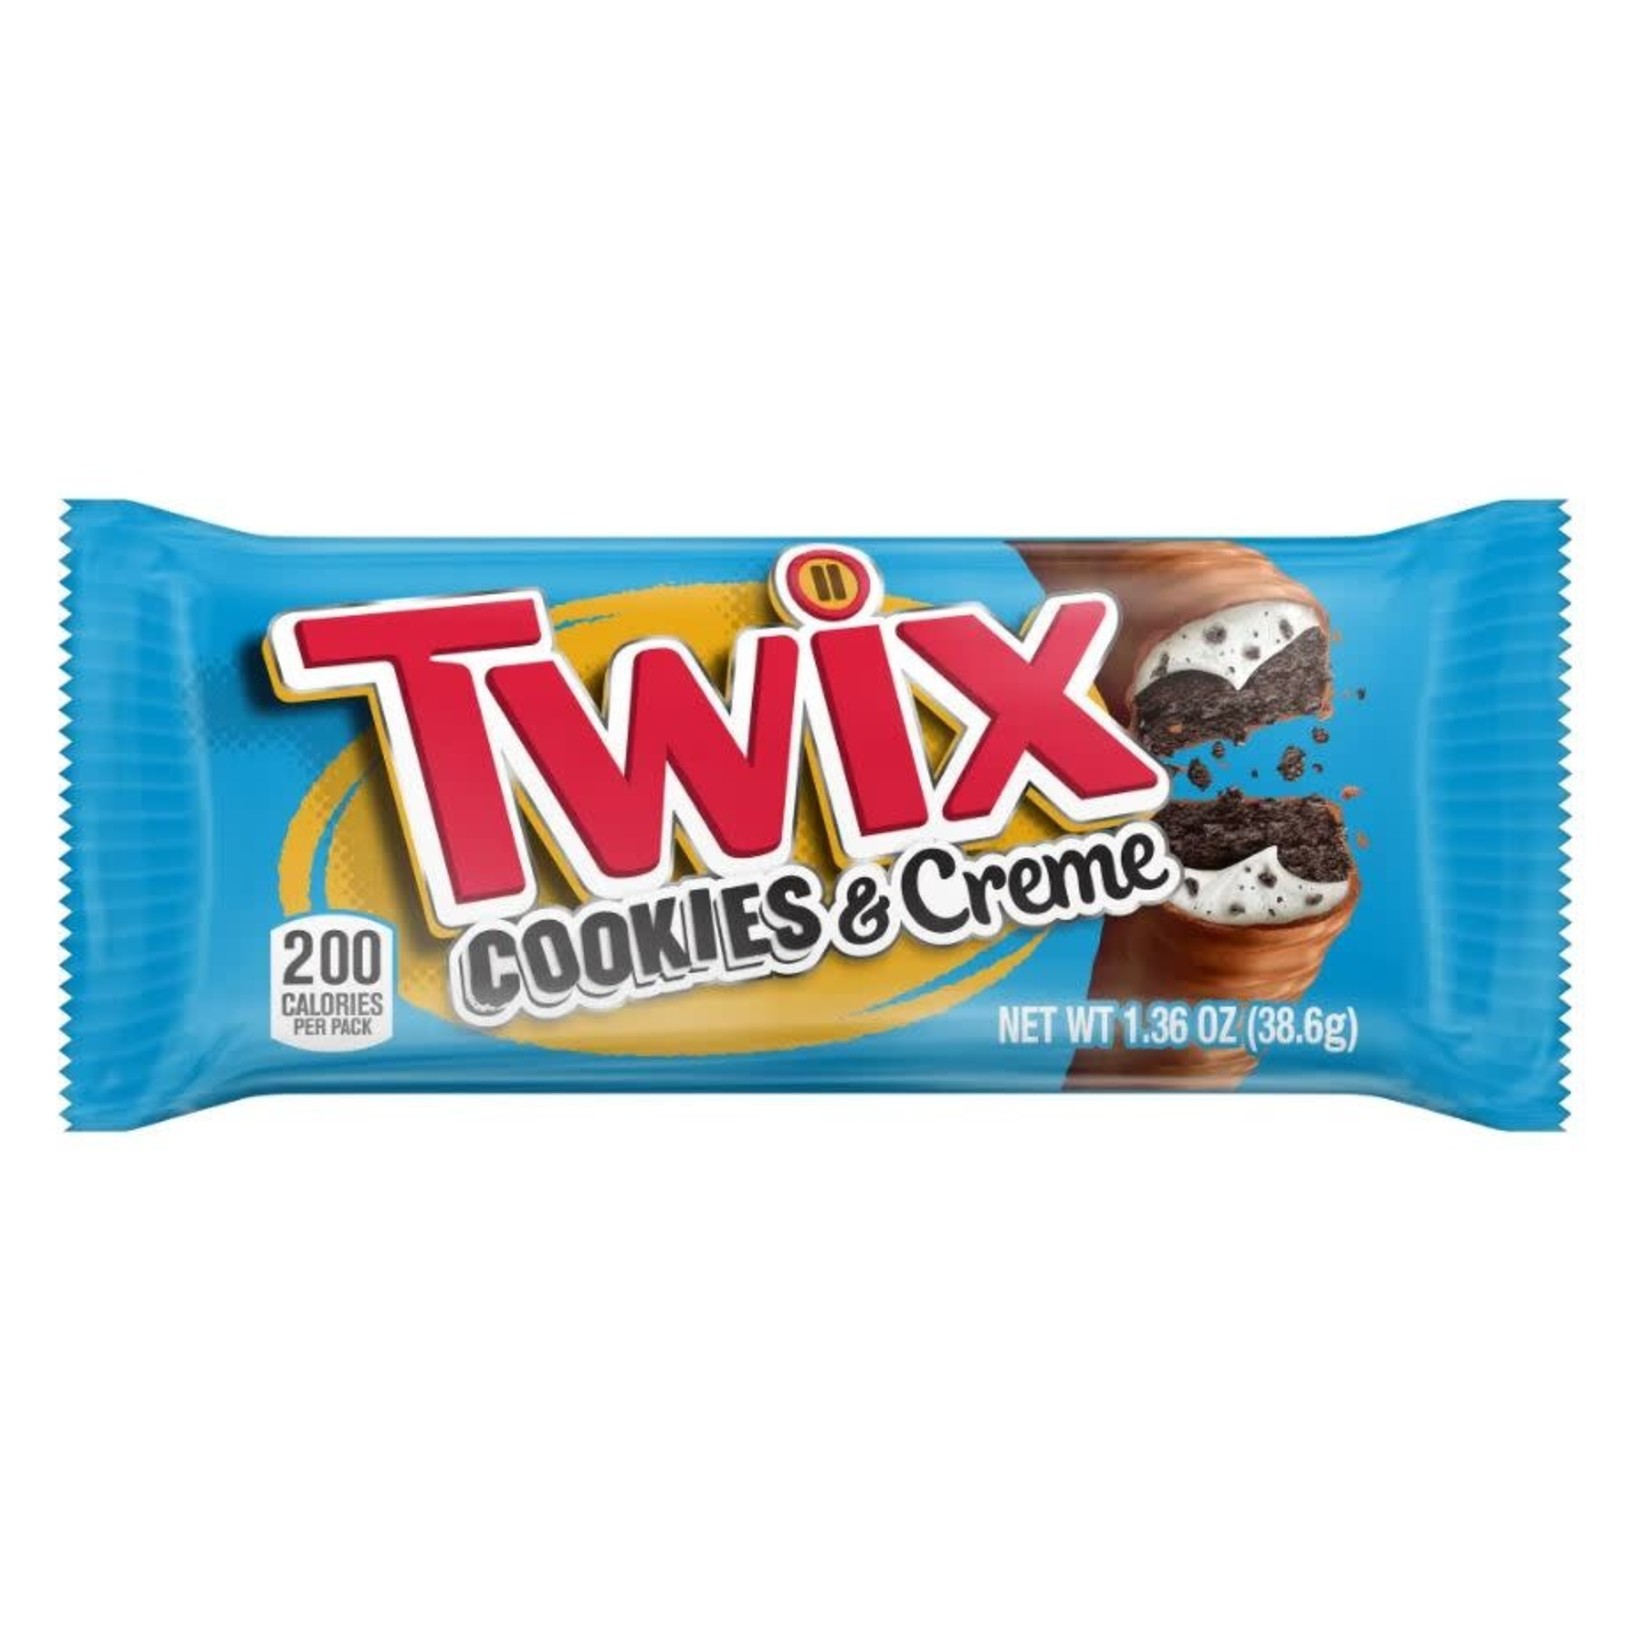 Twix Cookies & Crème,  38.6g